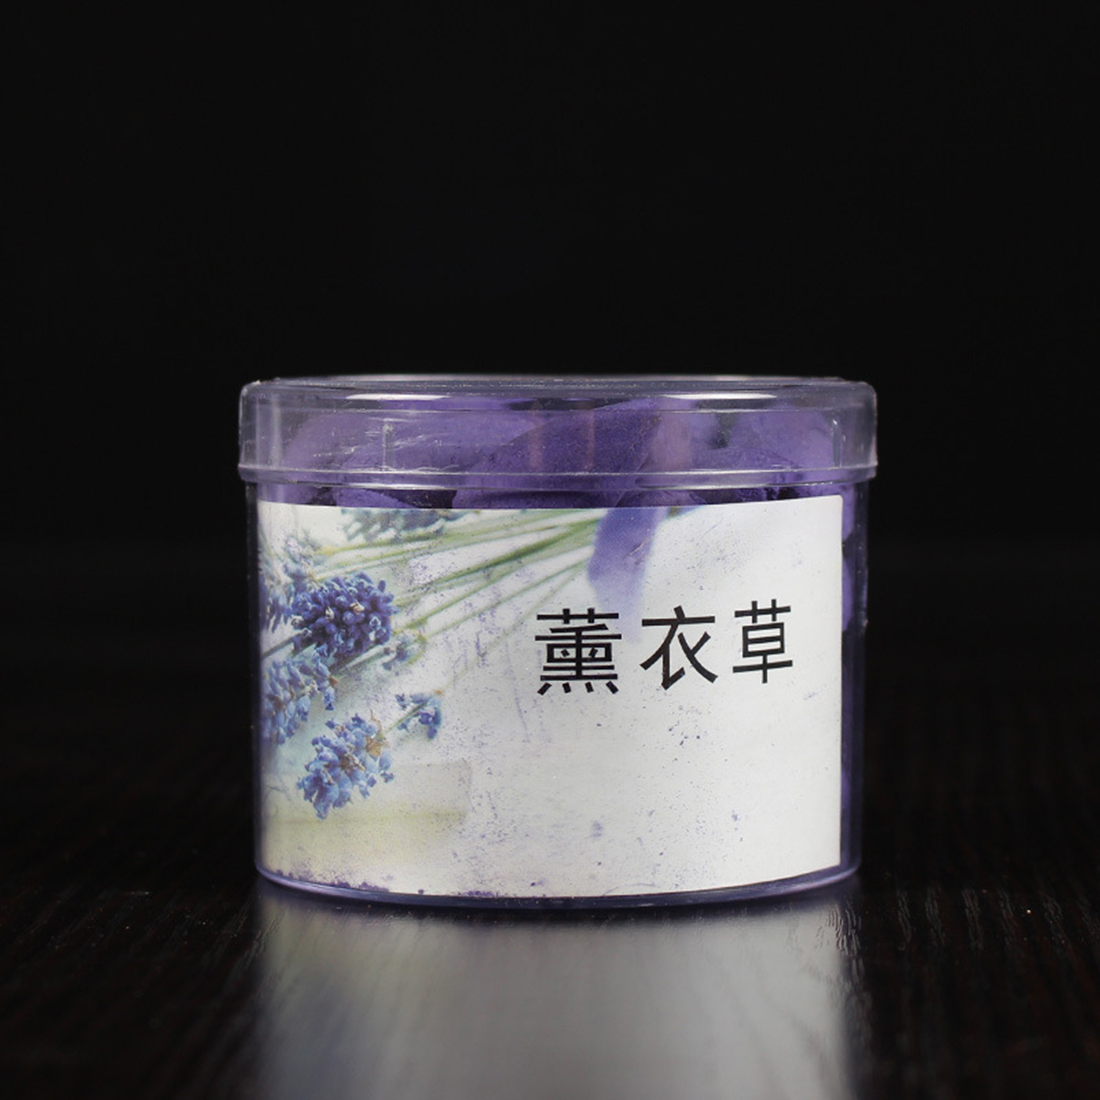  lavender scent